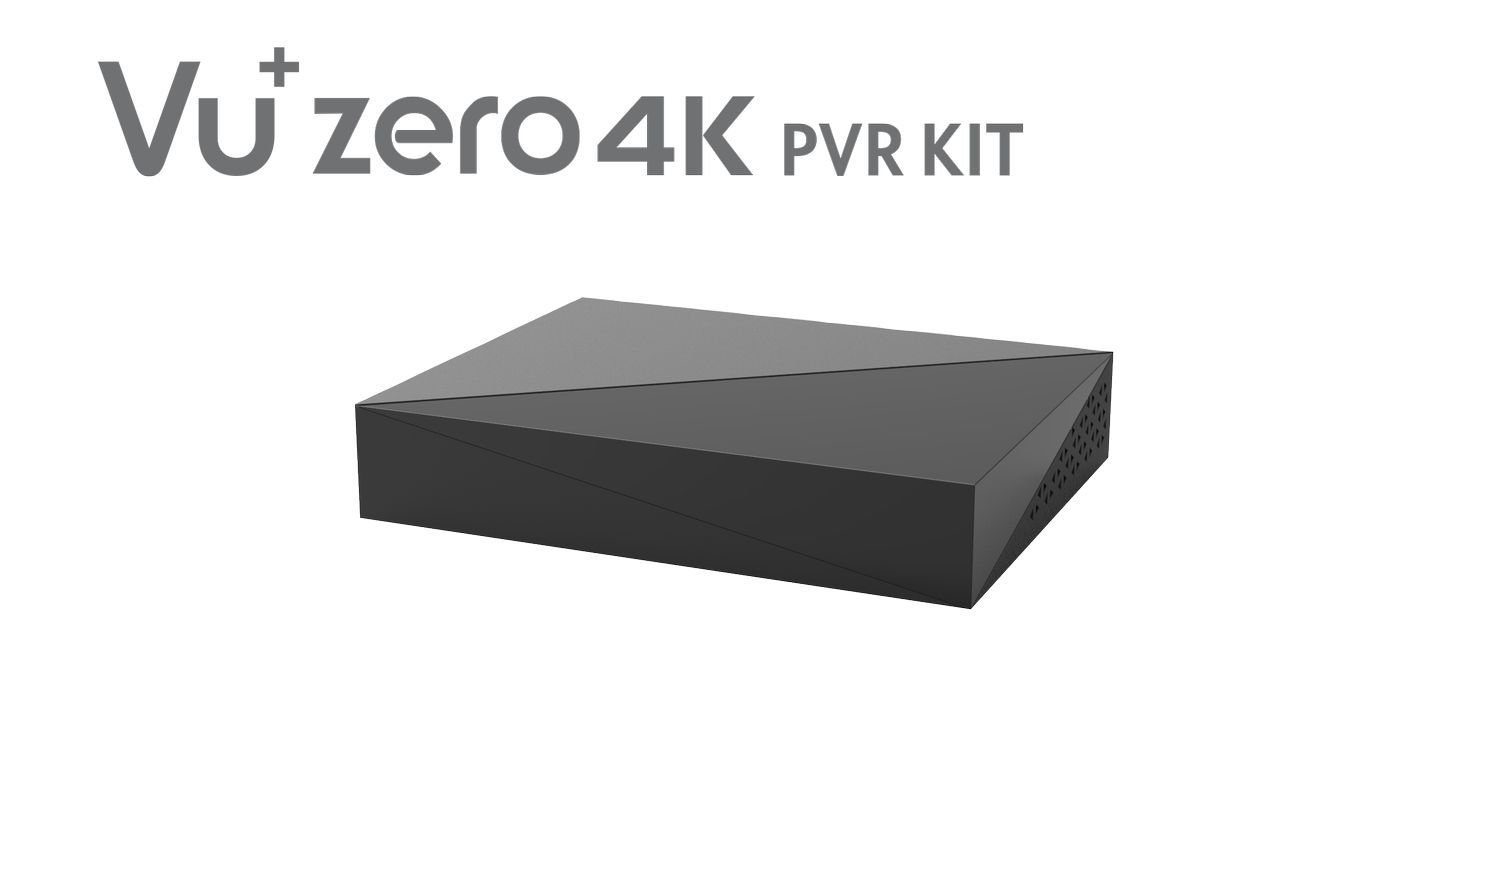 Kit Inklusive 500GB, VU+ VU+ PVR schwarz 4K HDD, Tuner Zero